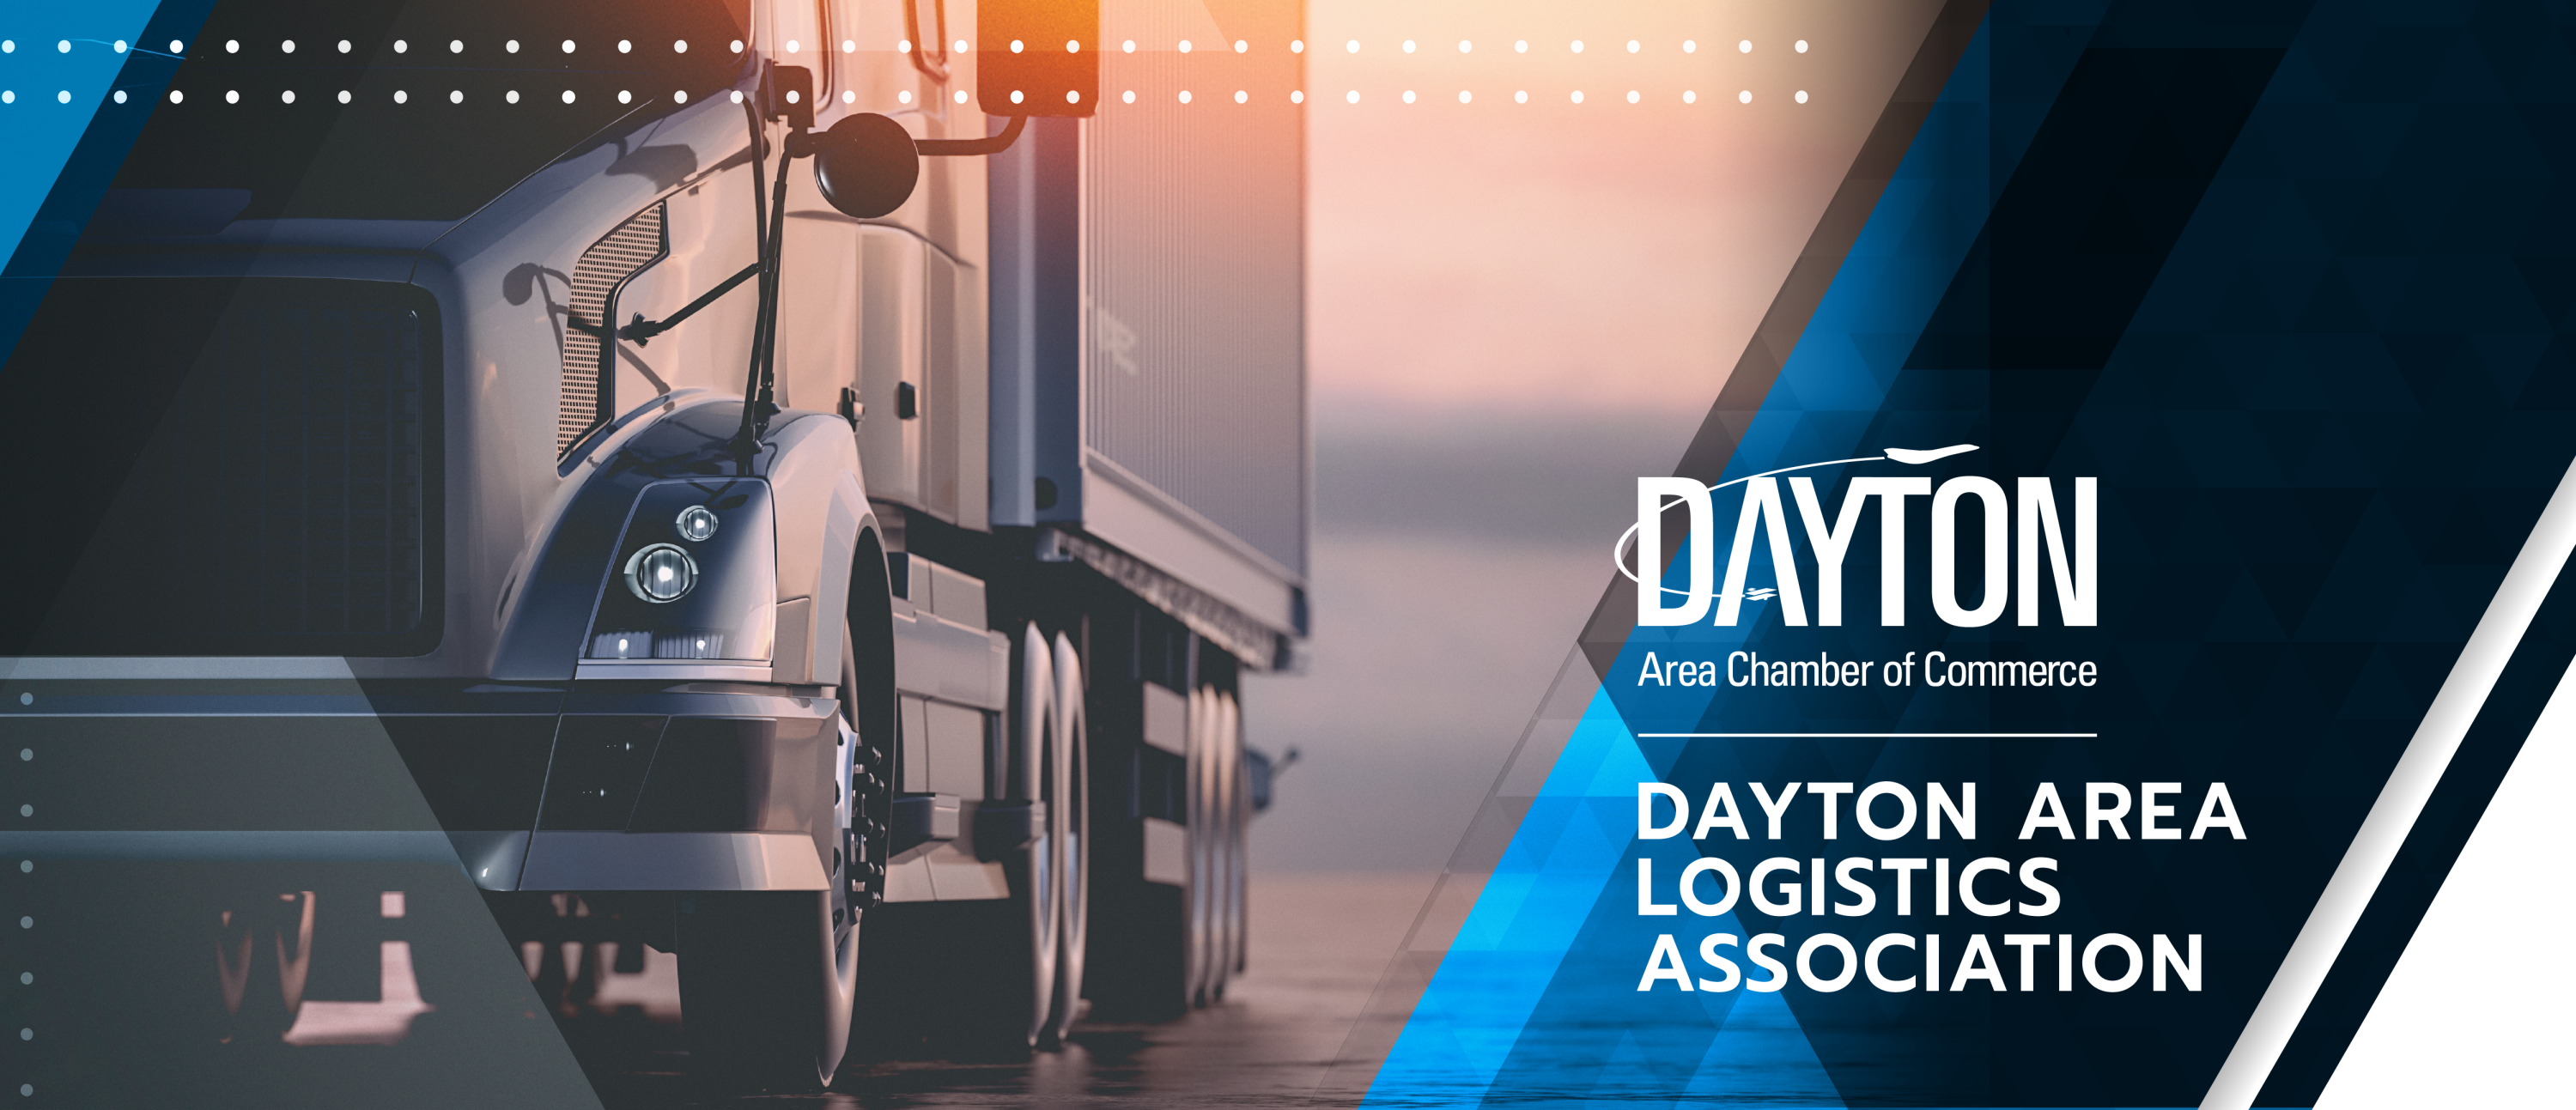 Dayton Area Logistics Association (DALA)'s Image